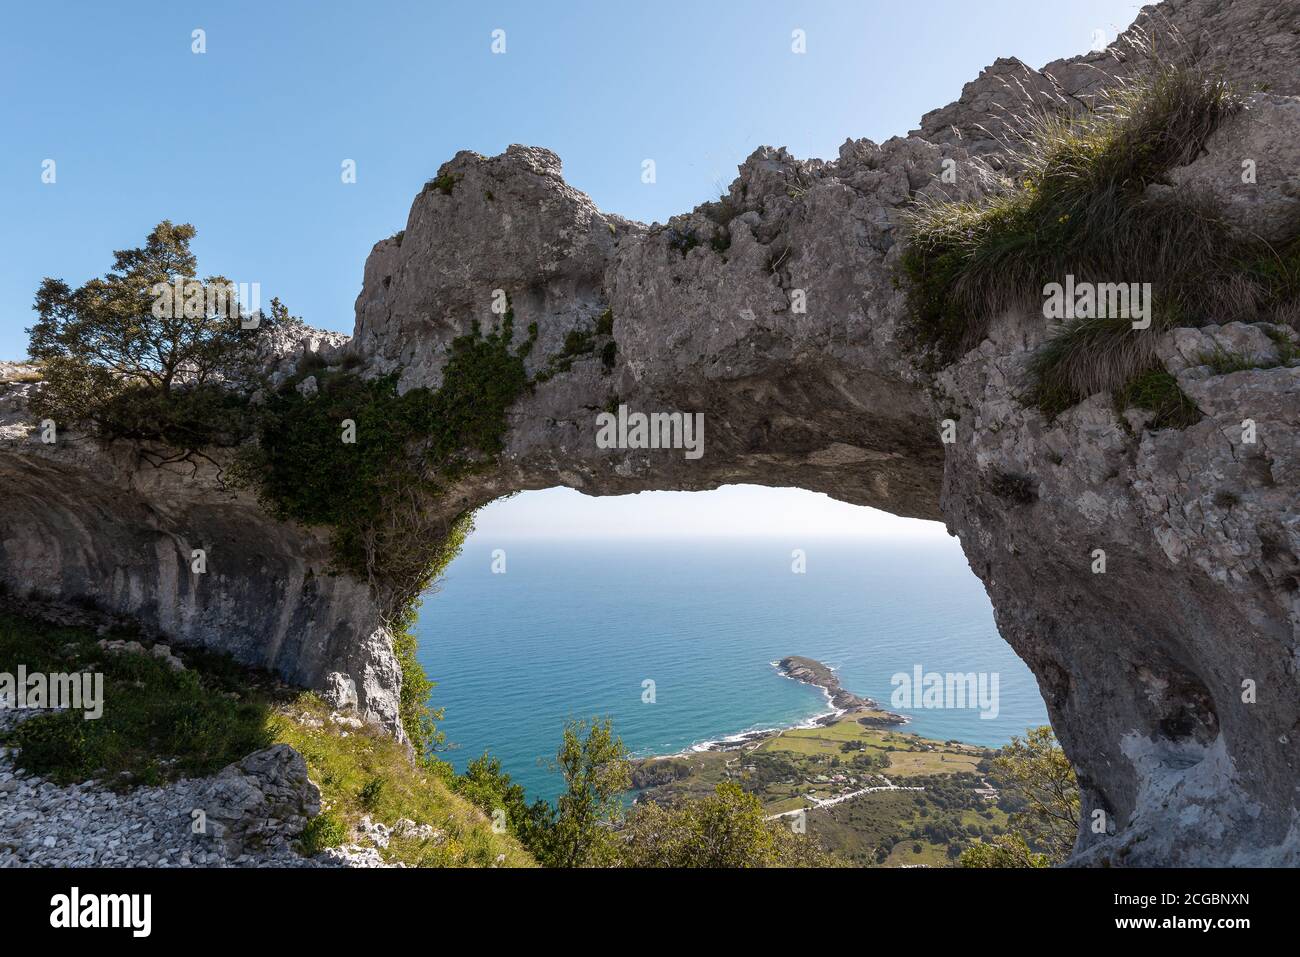 Natural arch called Ojo del Diablo (Eye of the Devil) in Cantabria, Spain Stock Photo